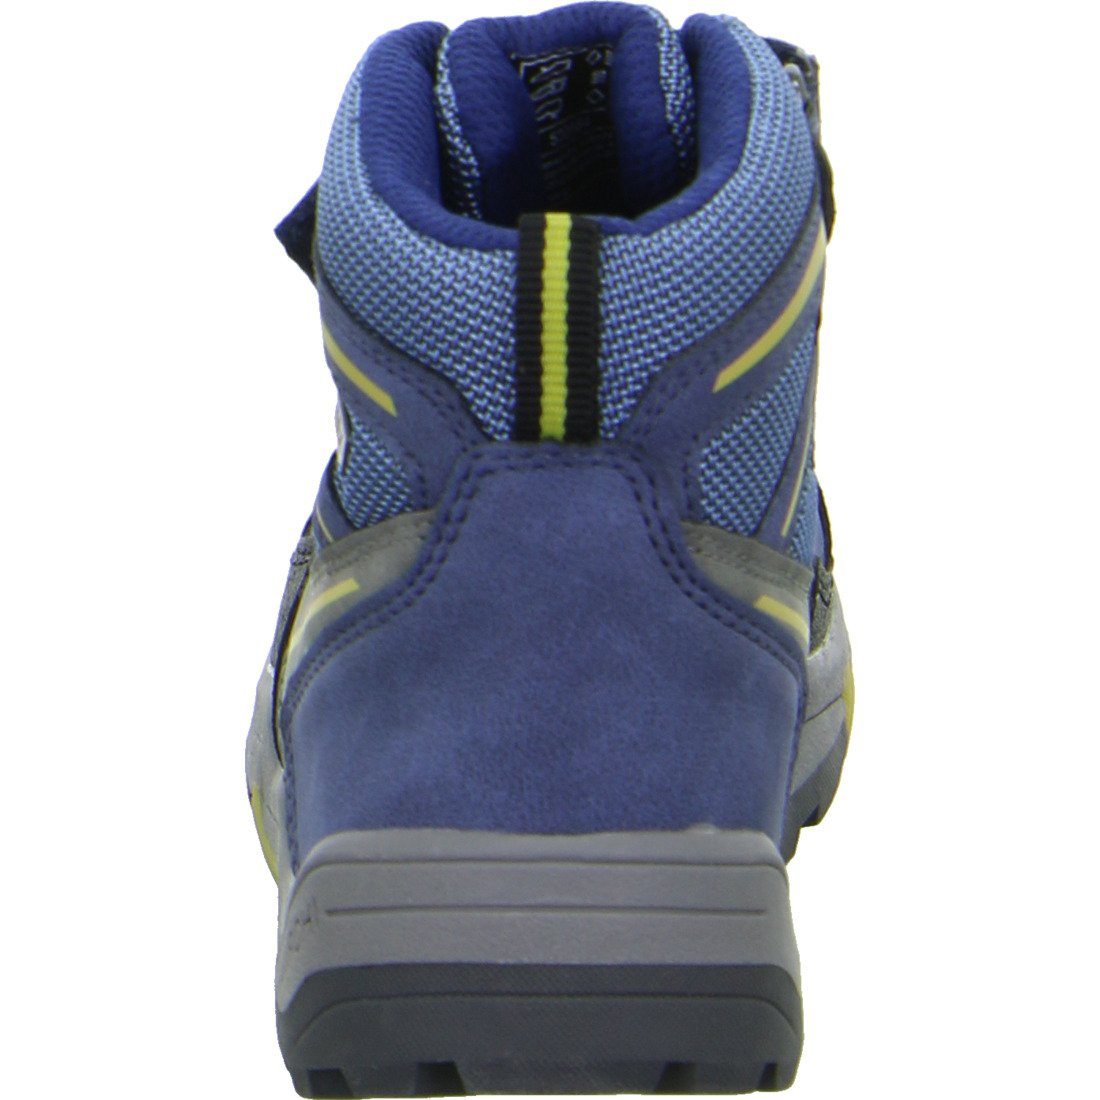 049287 Schuhe, blau Stiefel Stiefel - Lurchi Thilo-Tex Lurchi Textil